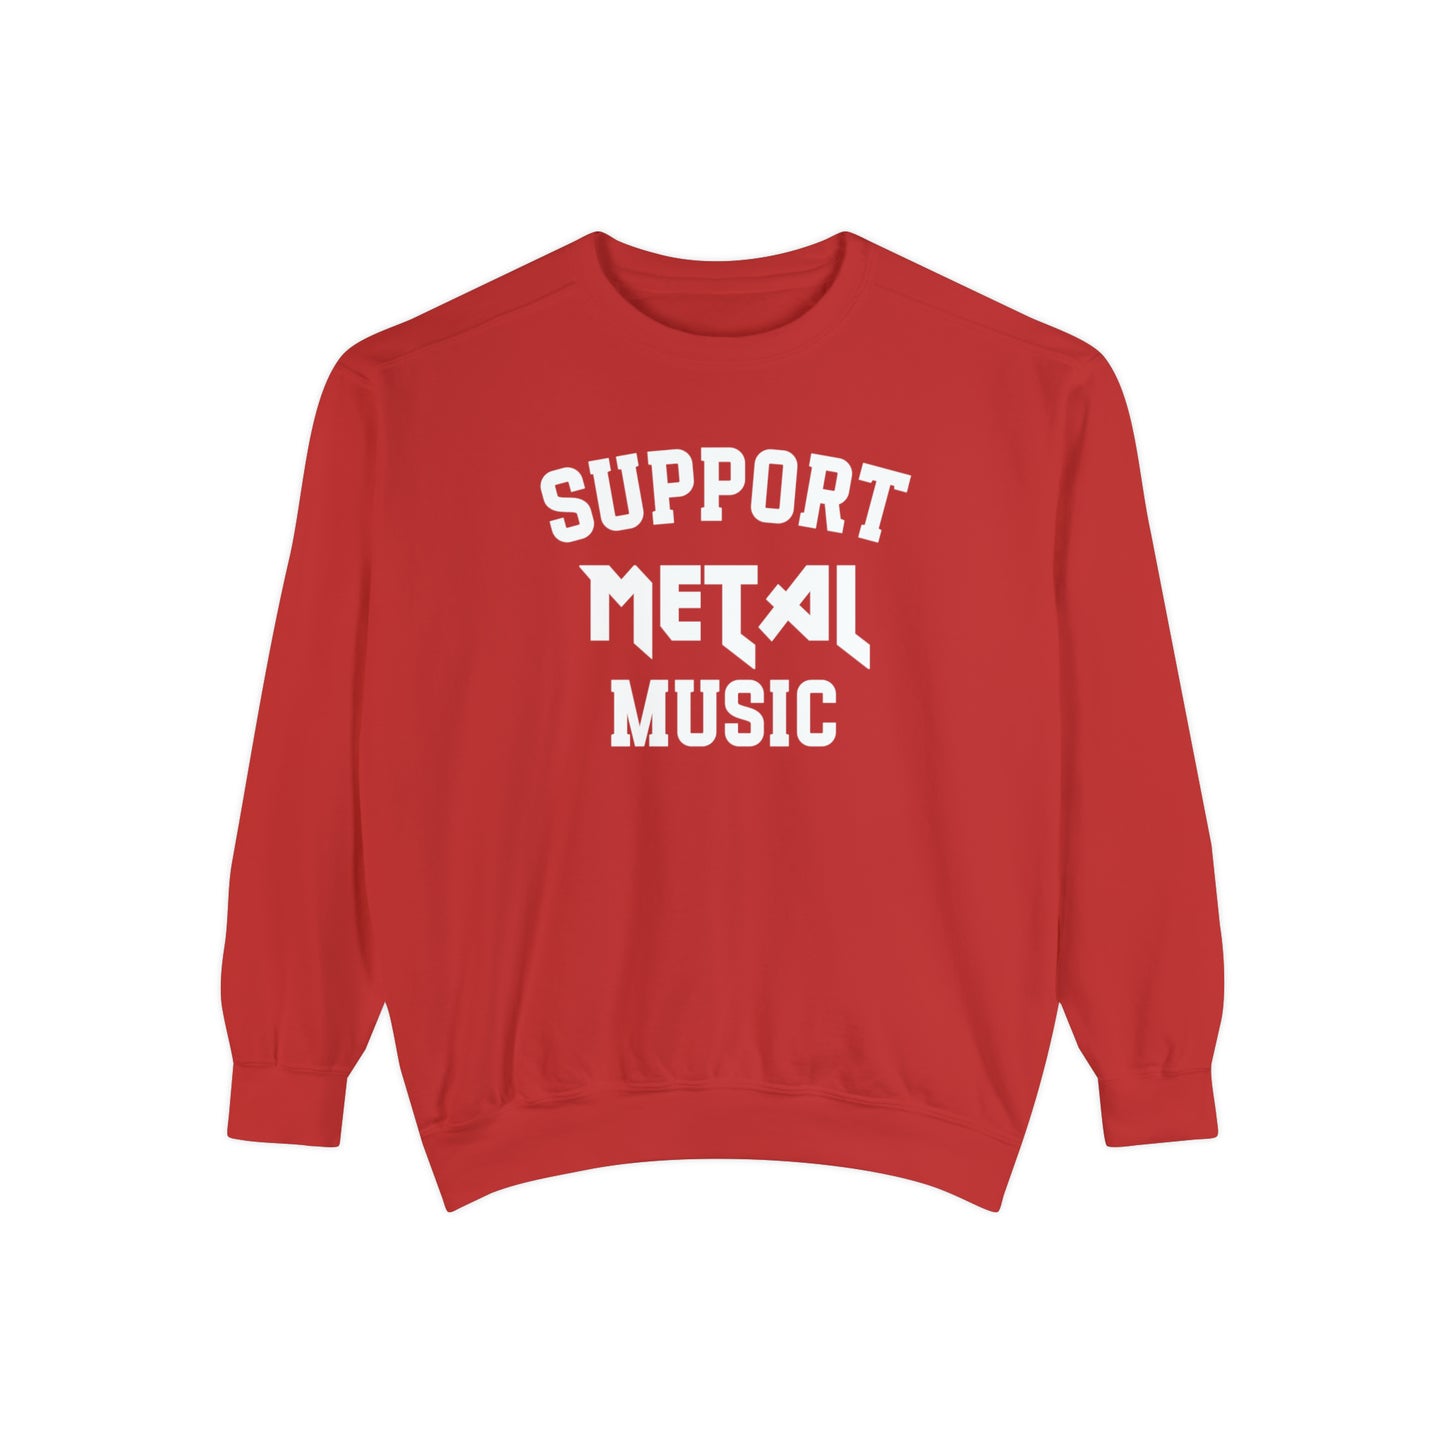 Support Metal Music Sweatshirt